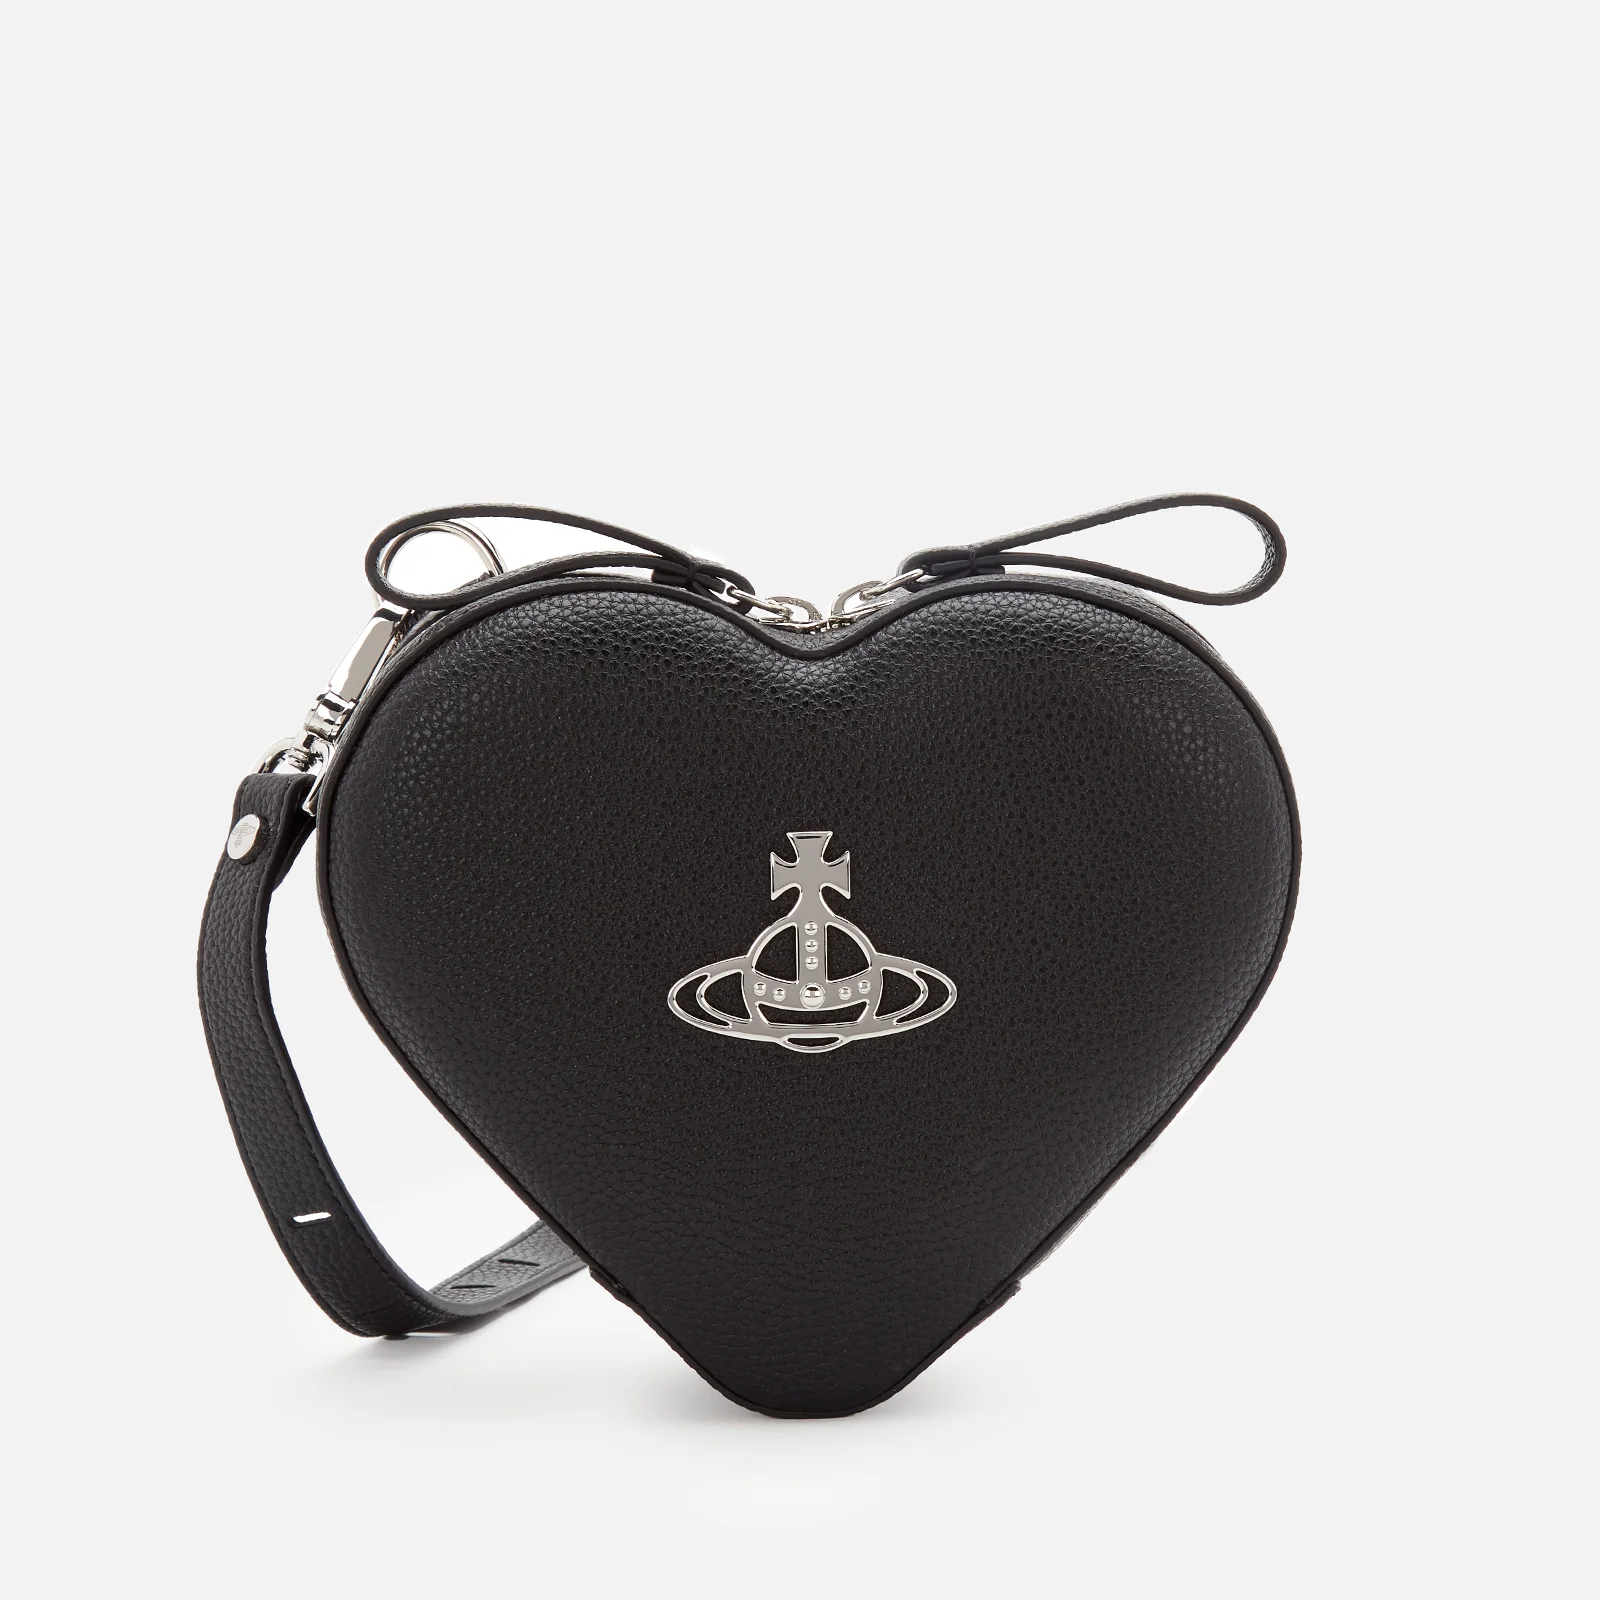 Vivienne Westwood Women's Johanna Heart Mini Backpack - Black Image 1